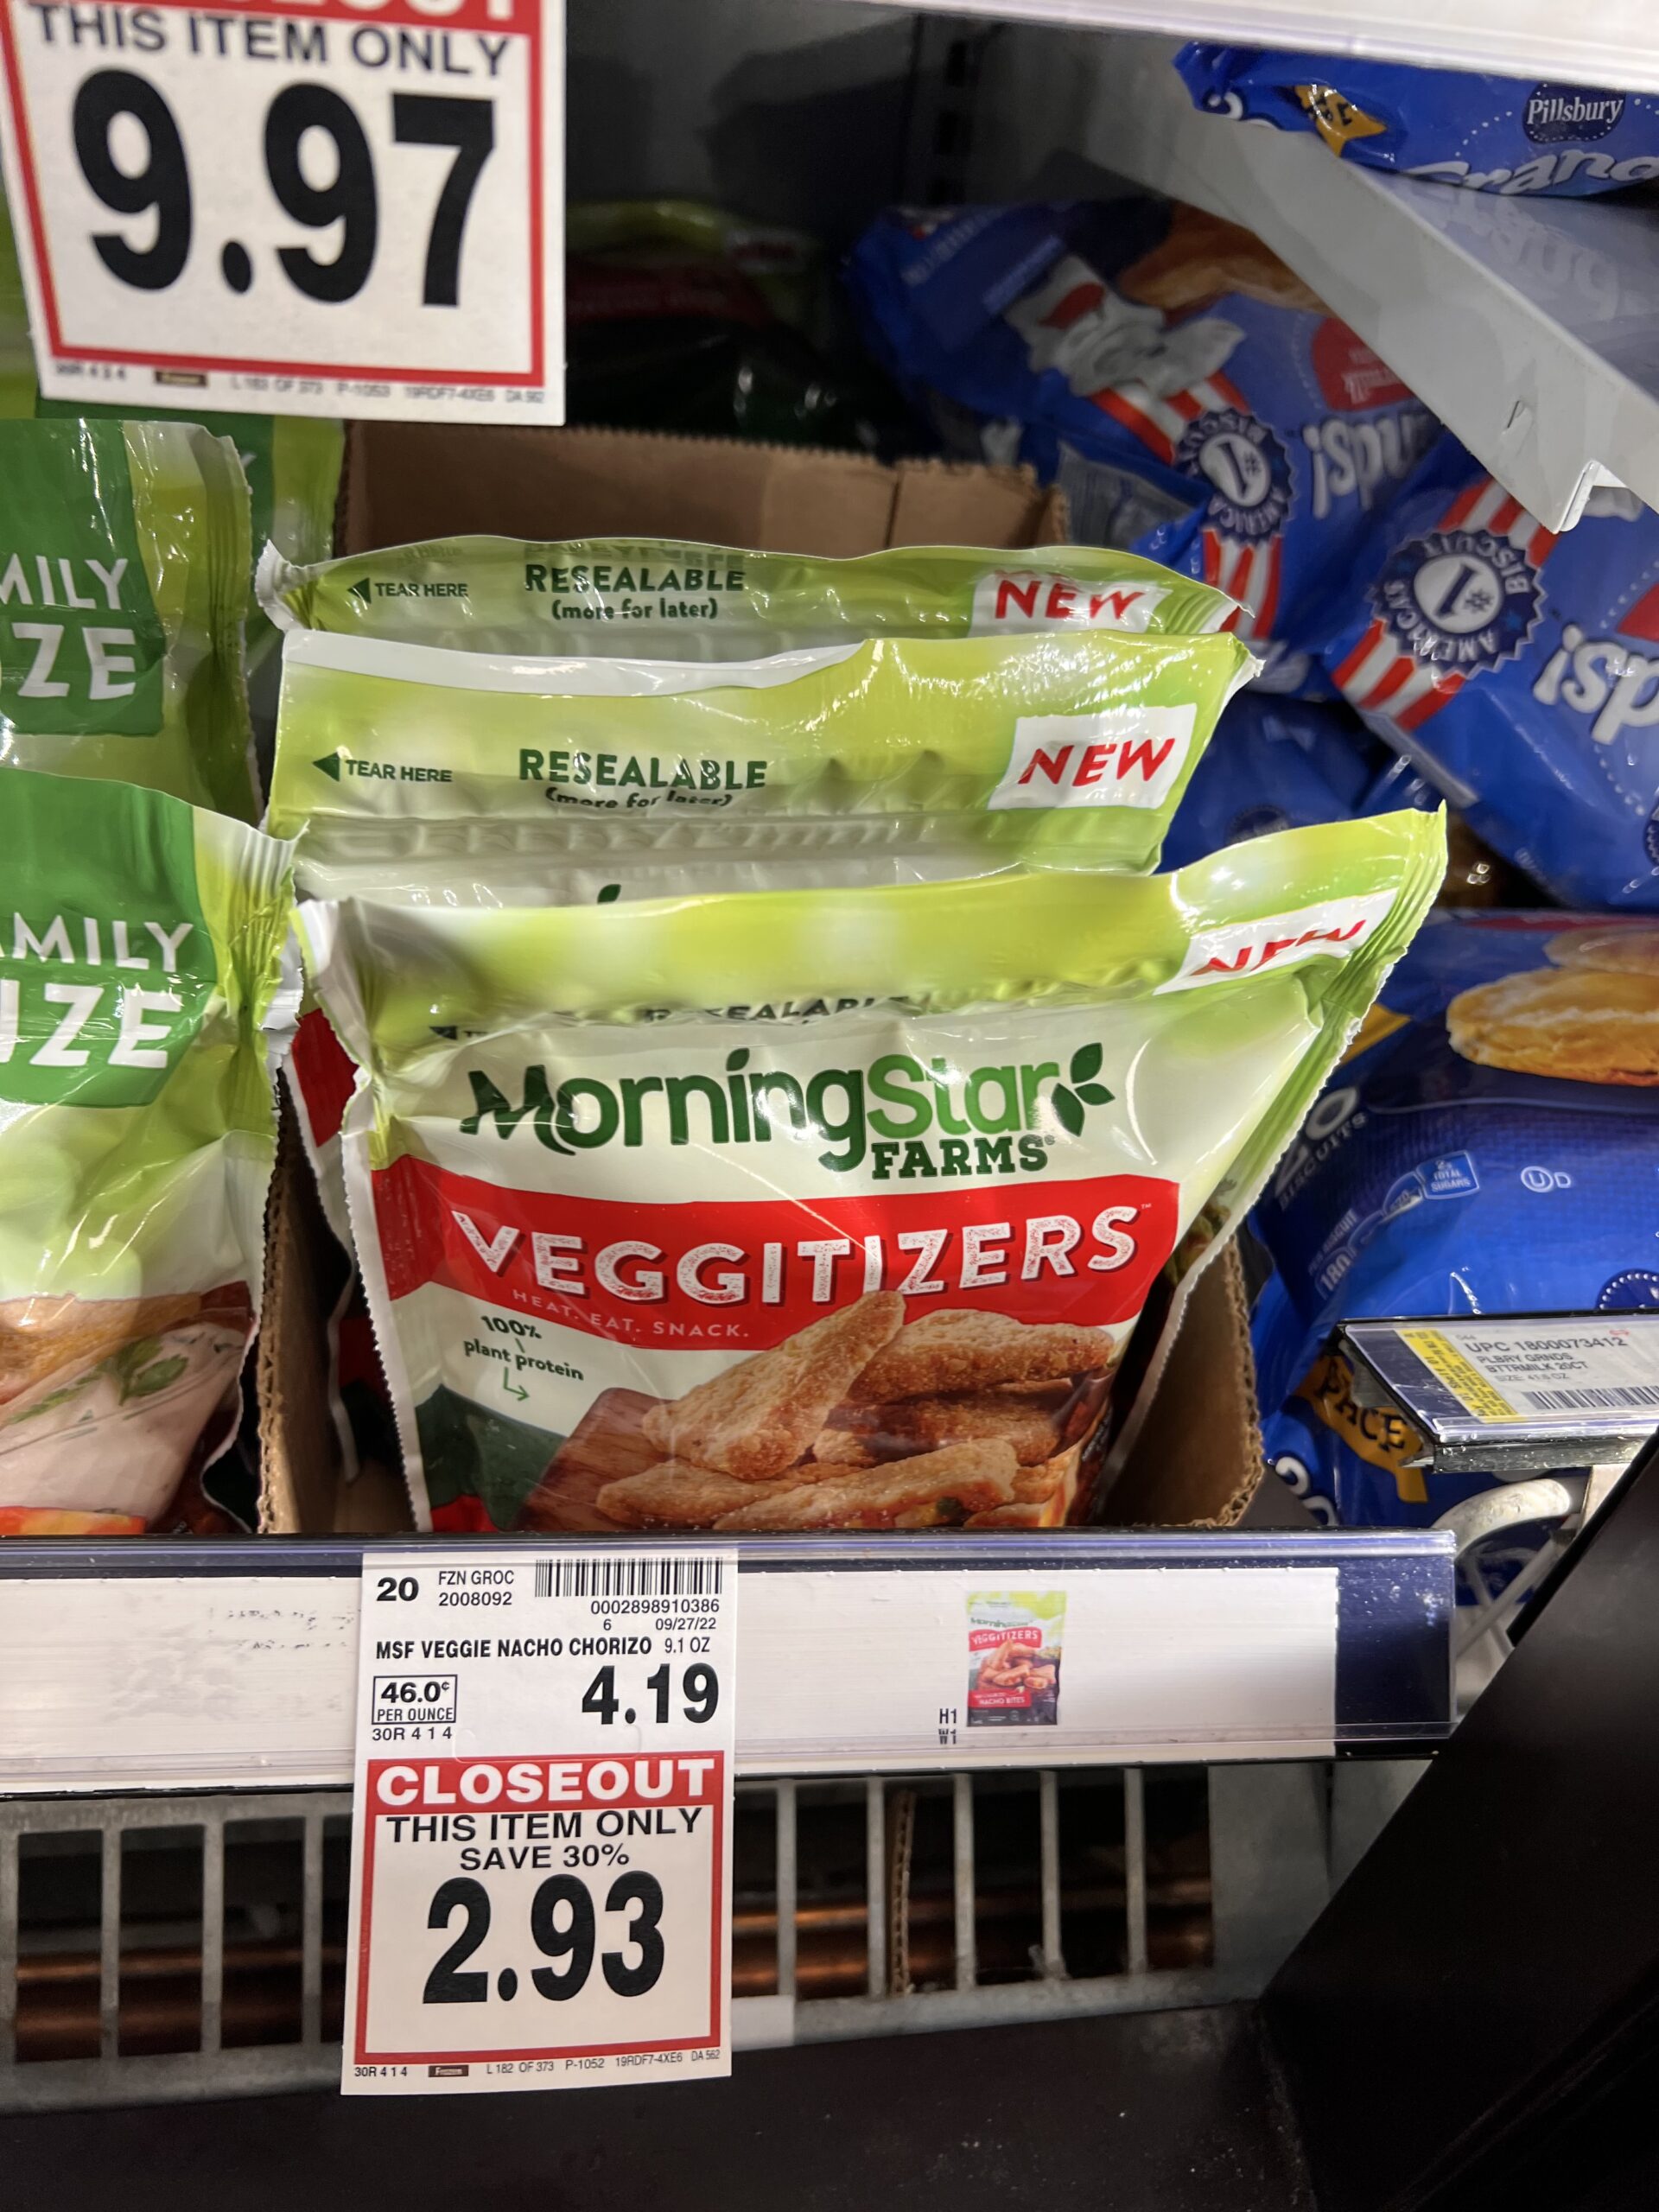 Morningstar Farms Veggitizers Kroger Shelf 3